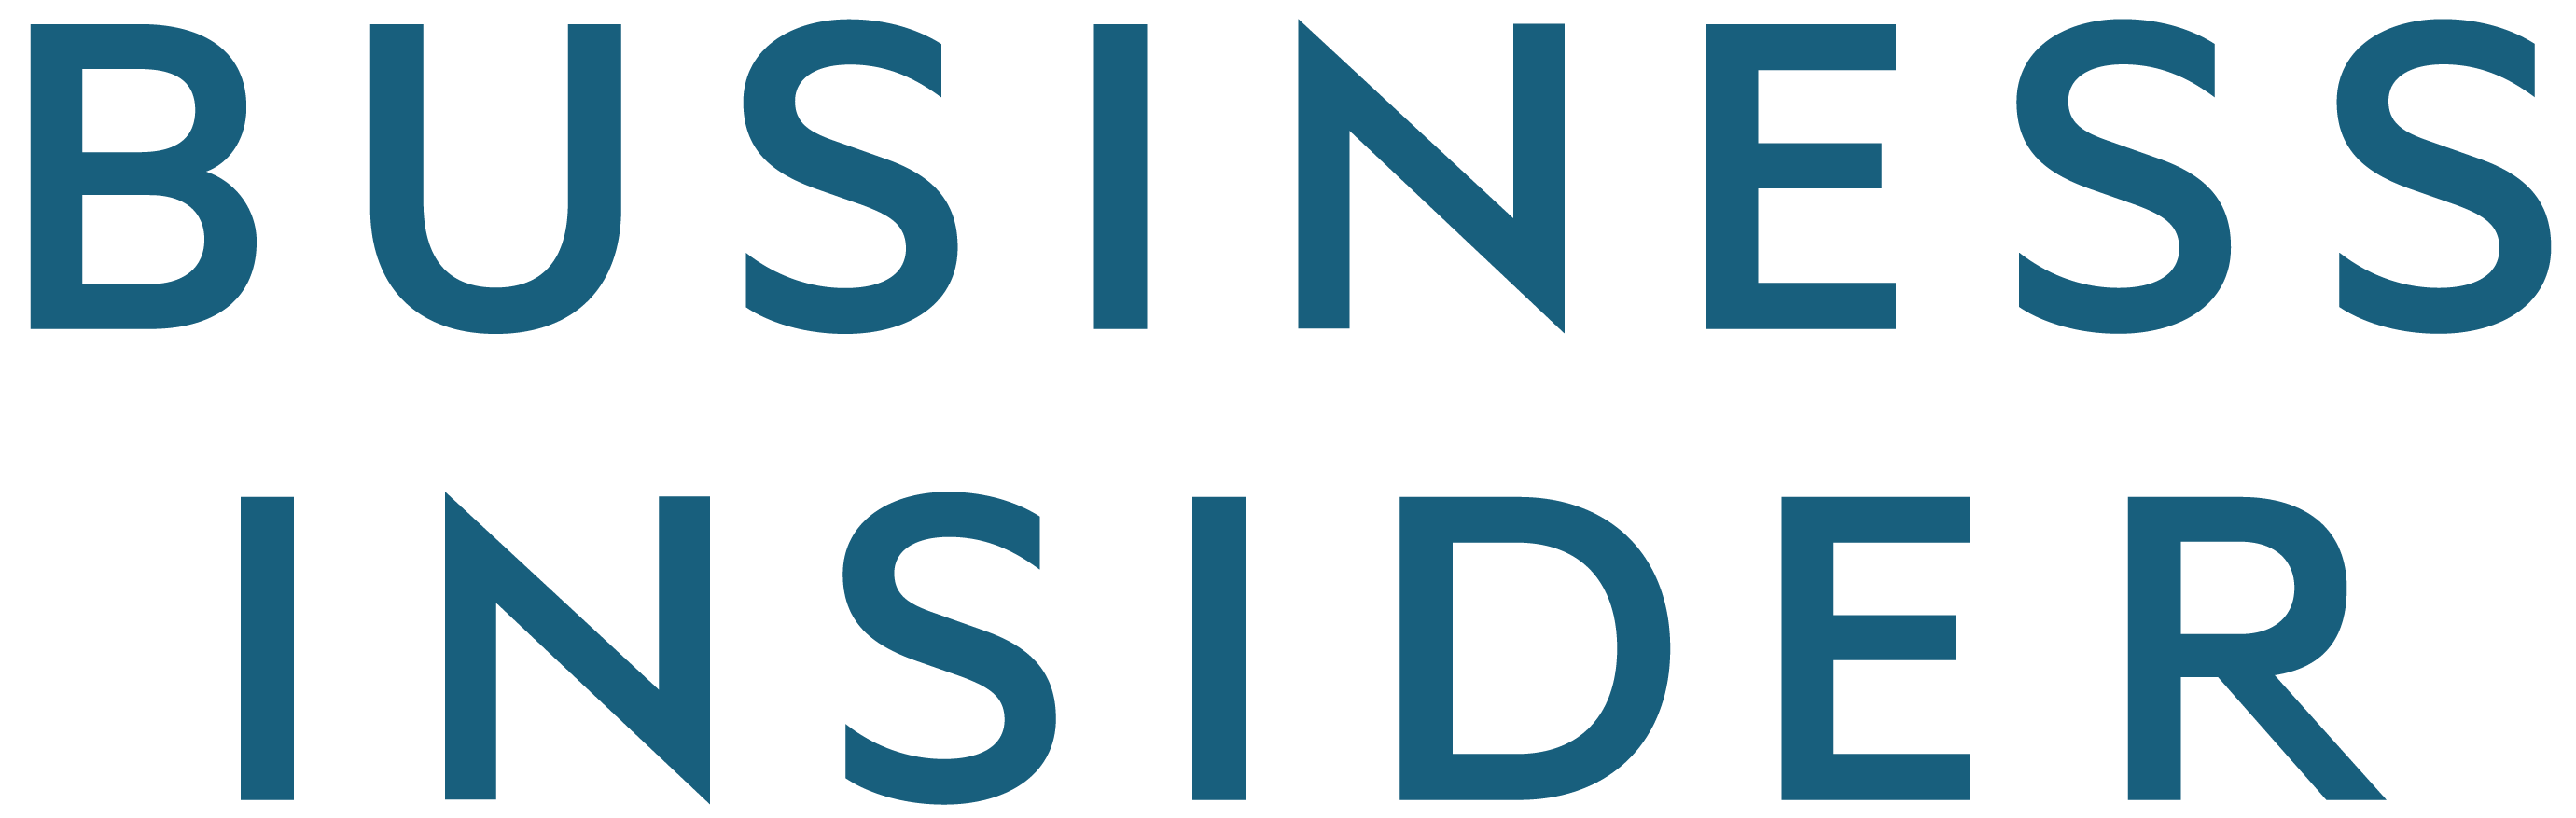 business_insider_logo-1